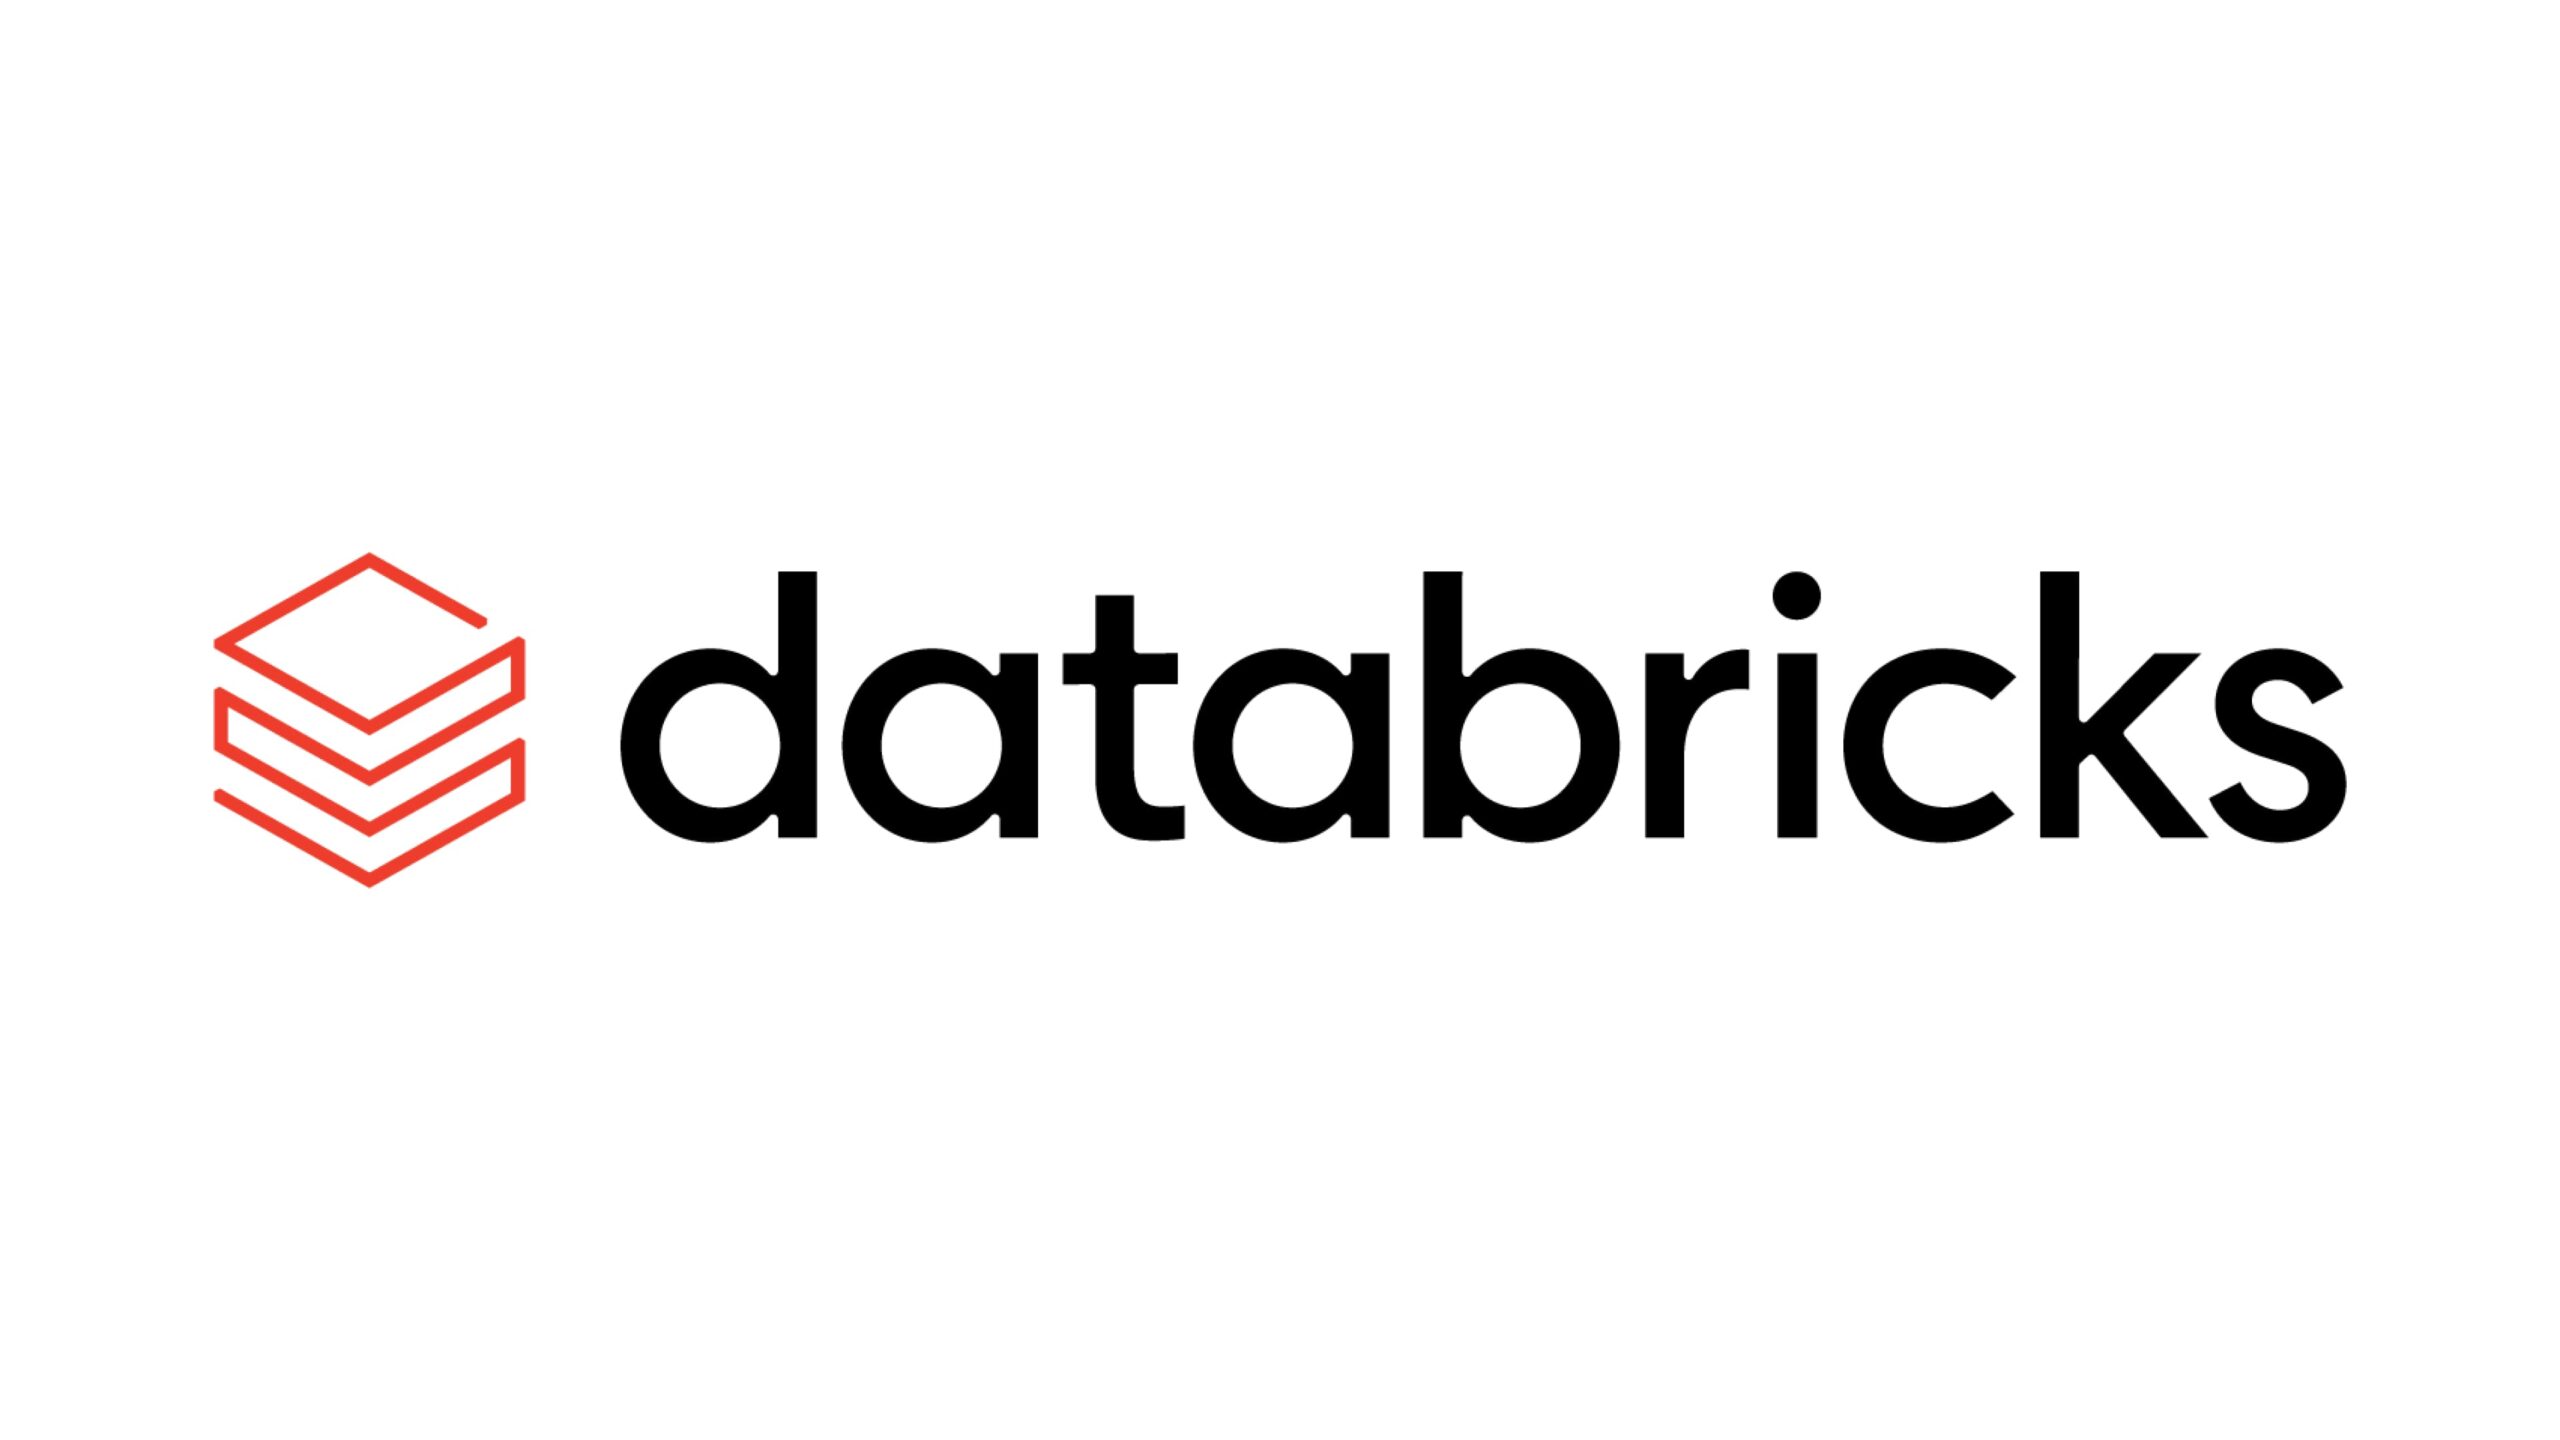 Databricksが5億ドル調達、後半期の暗い雰囲気にもかかわらず評価額は430億ドルに上昇